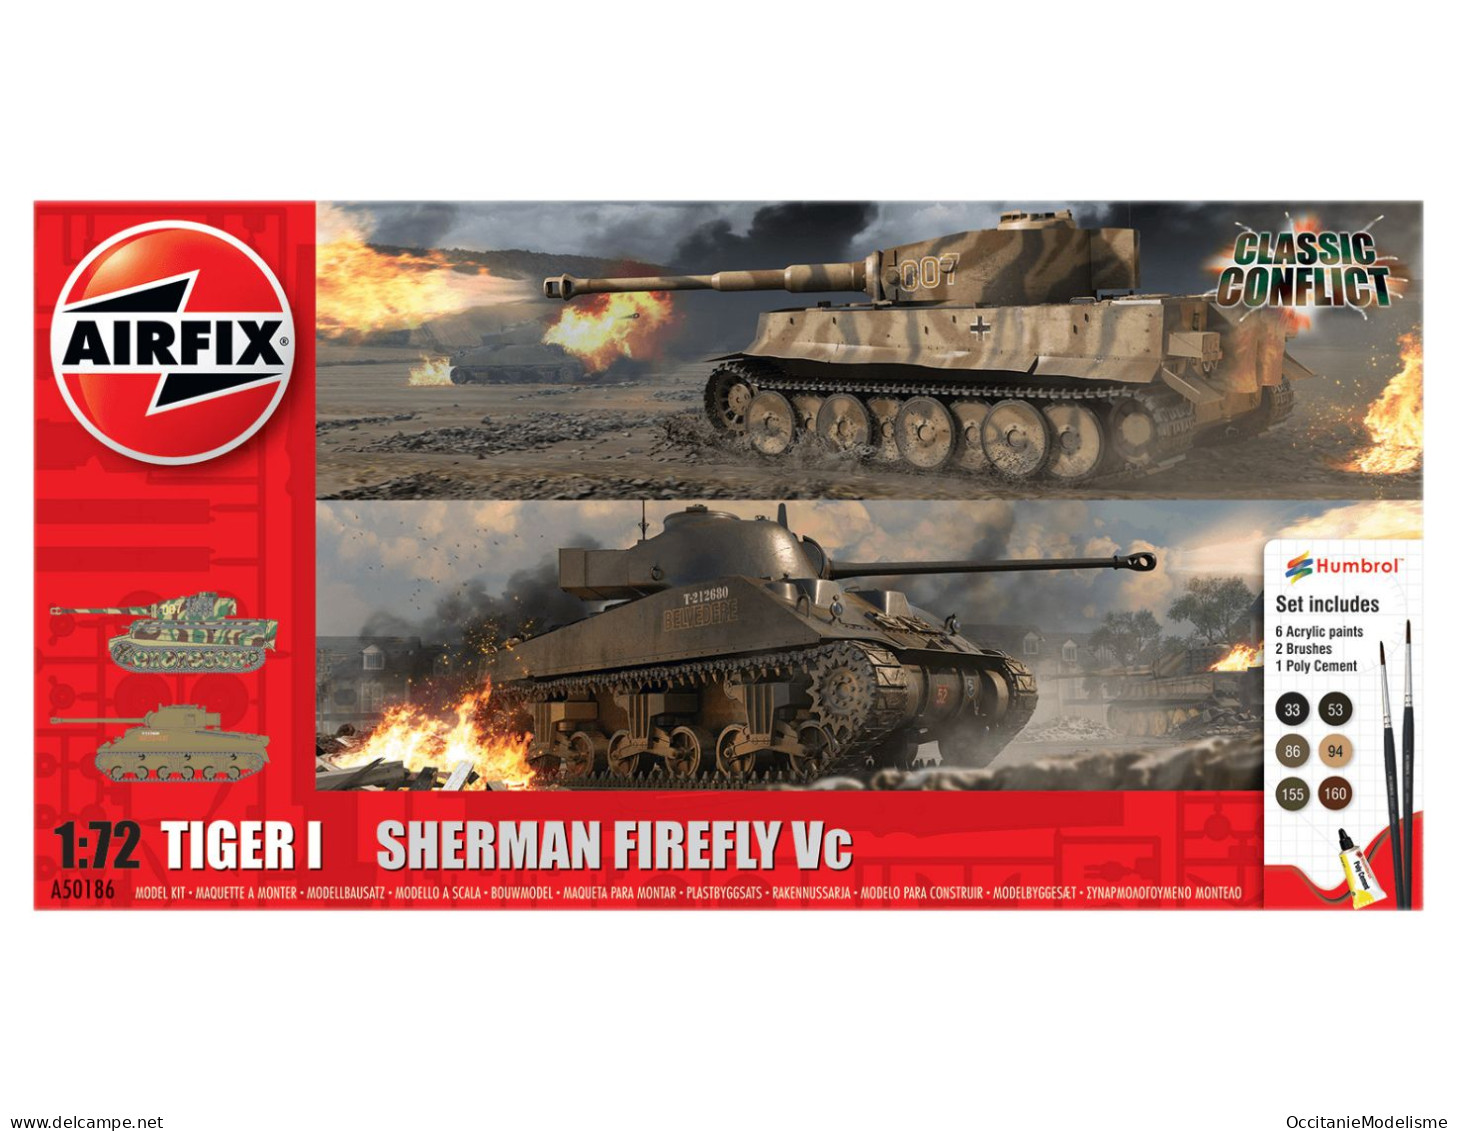 Airfix - Coffret TIGER I Vs SHERMAN FIREFLY Vc Maquettes + Peintures + Colle Réf. A50186 Neuf NBO 1/72 - Militaire Voertuigen